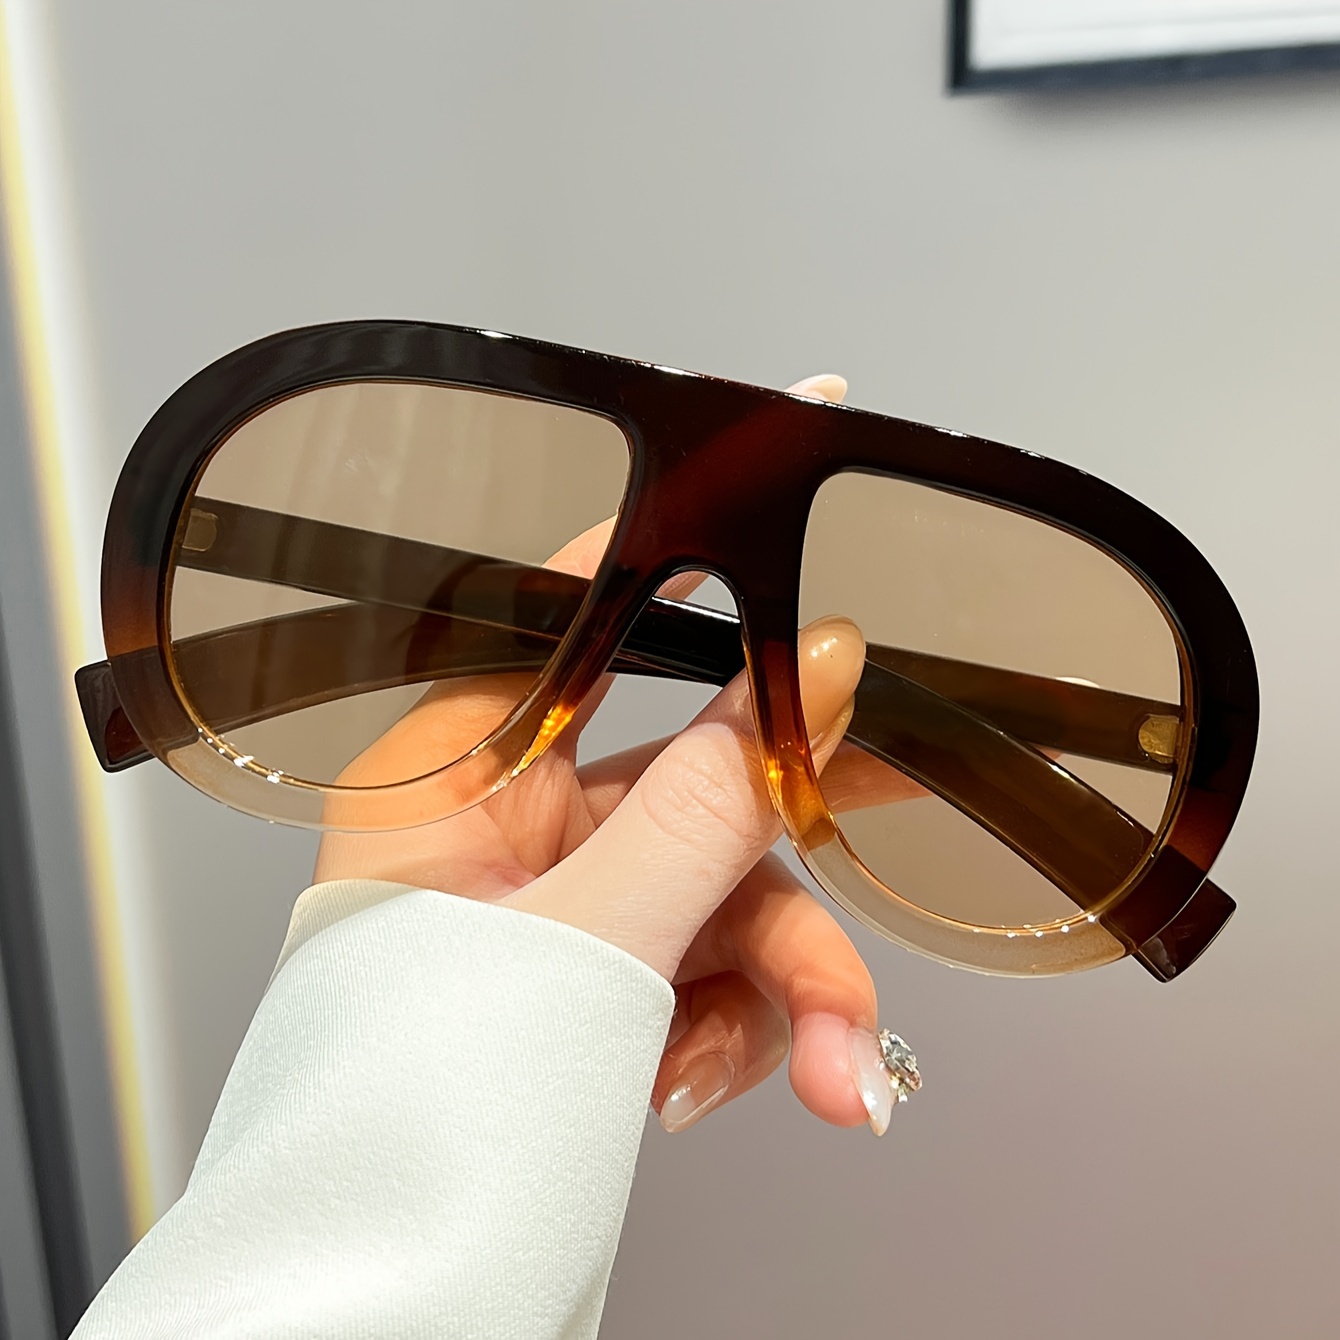 

Gradient Frame Fashion Glasses For Women Men Anti Glare Sun Shades Glasses For Driving Beach Travel